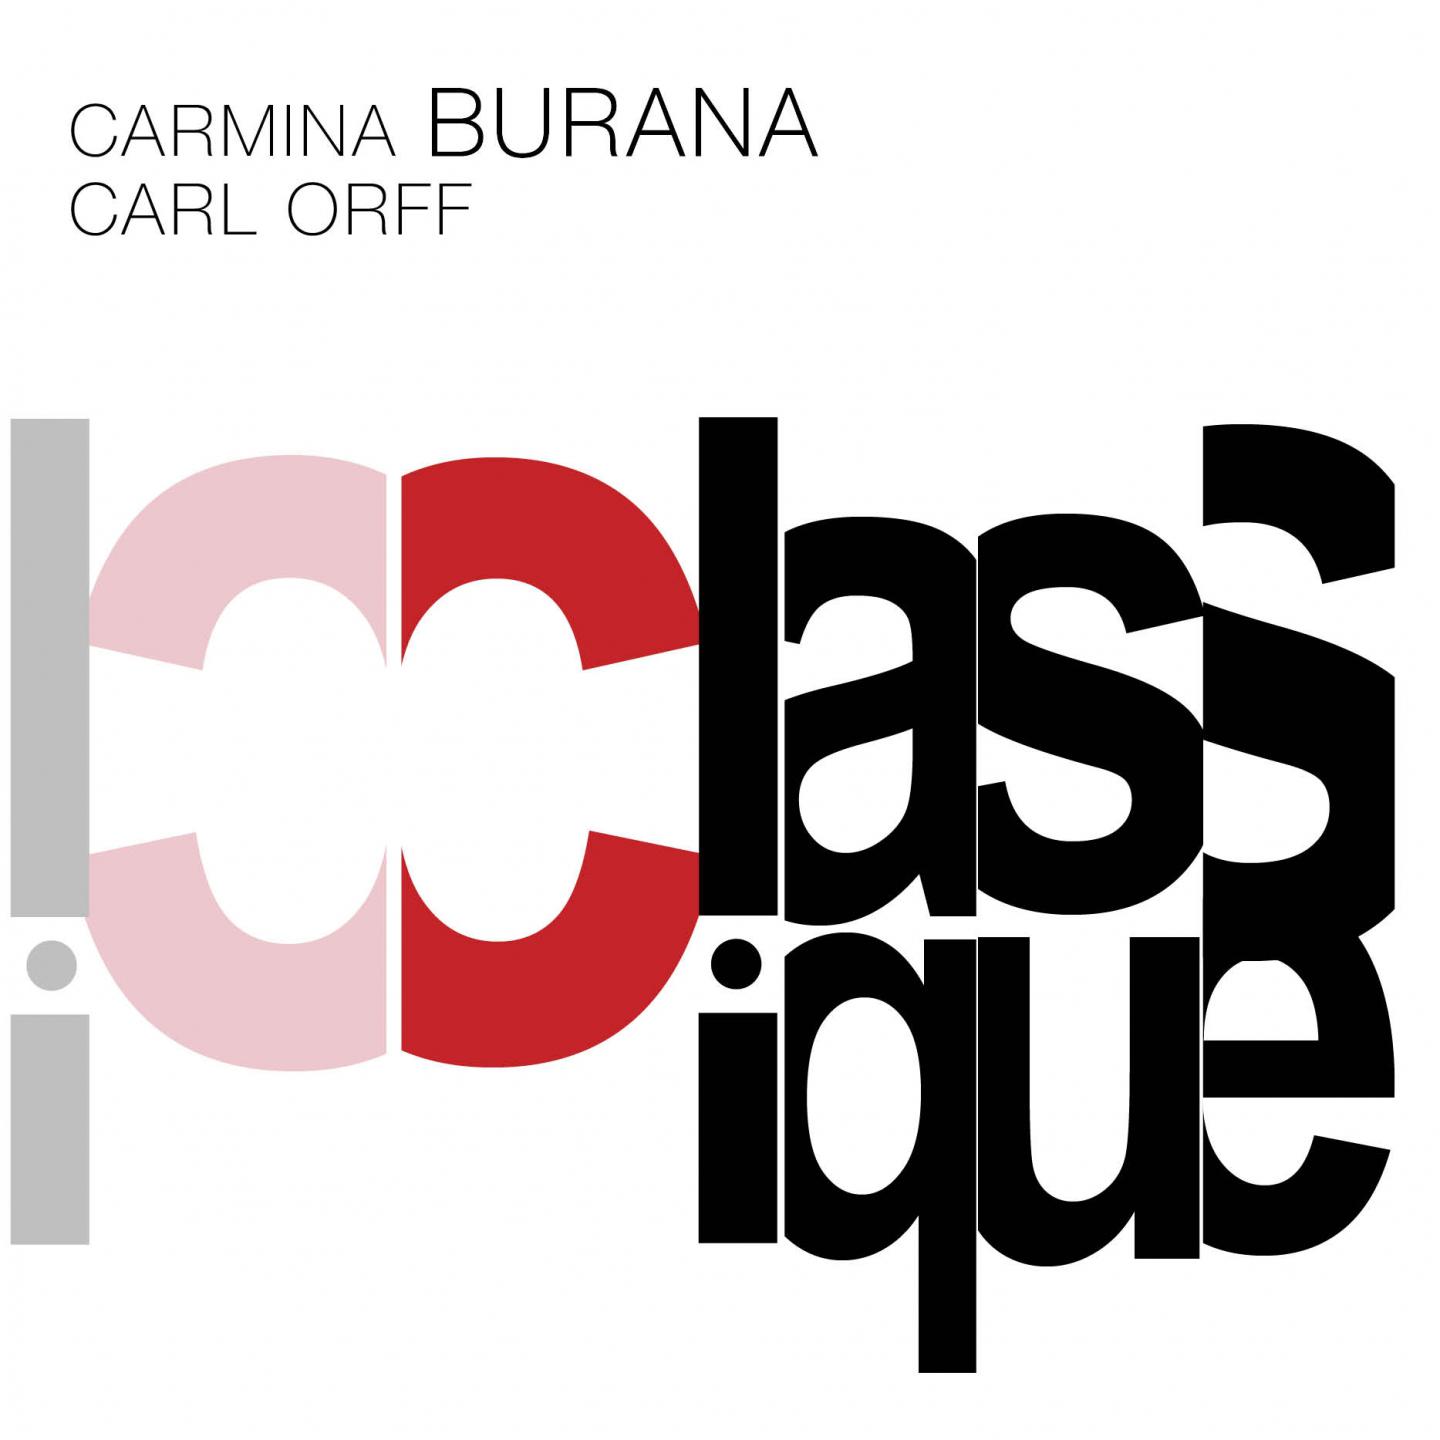 Carmina Burana: Cour d'amours. Dies, nox et omnia (Live)